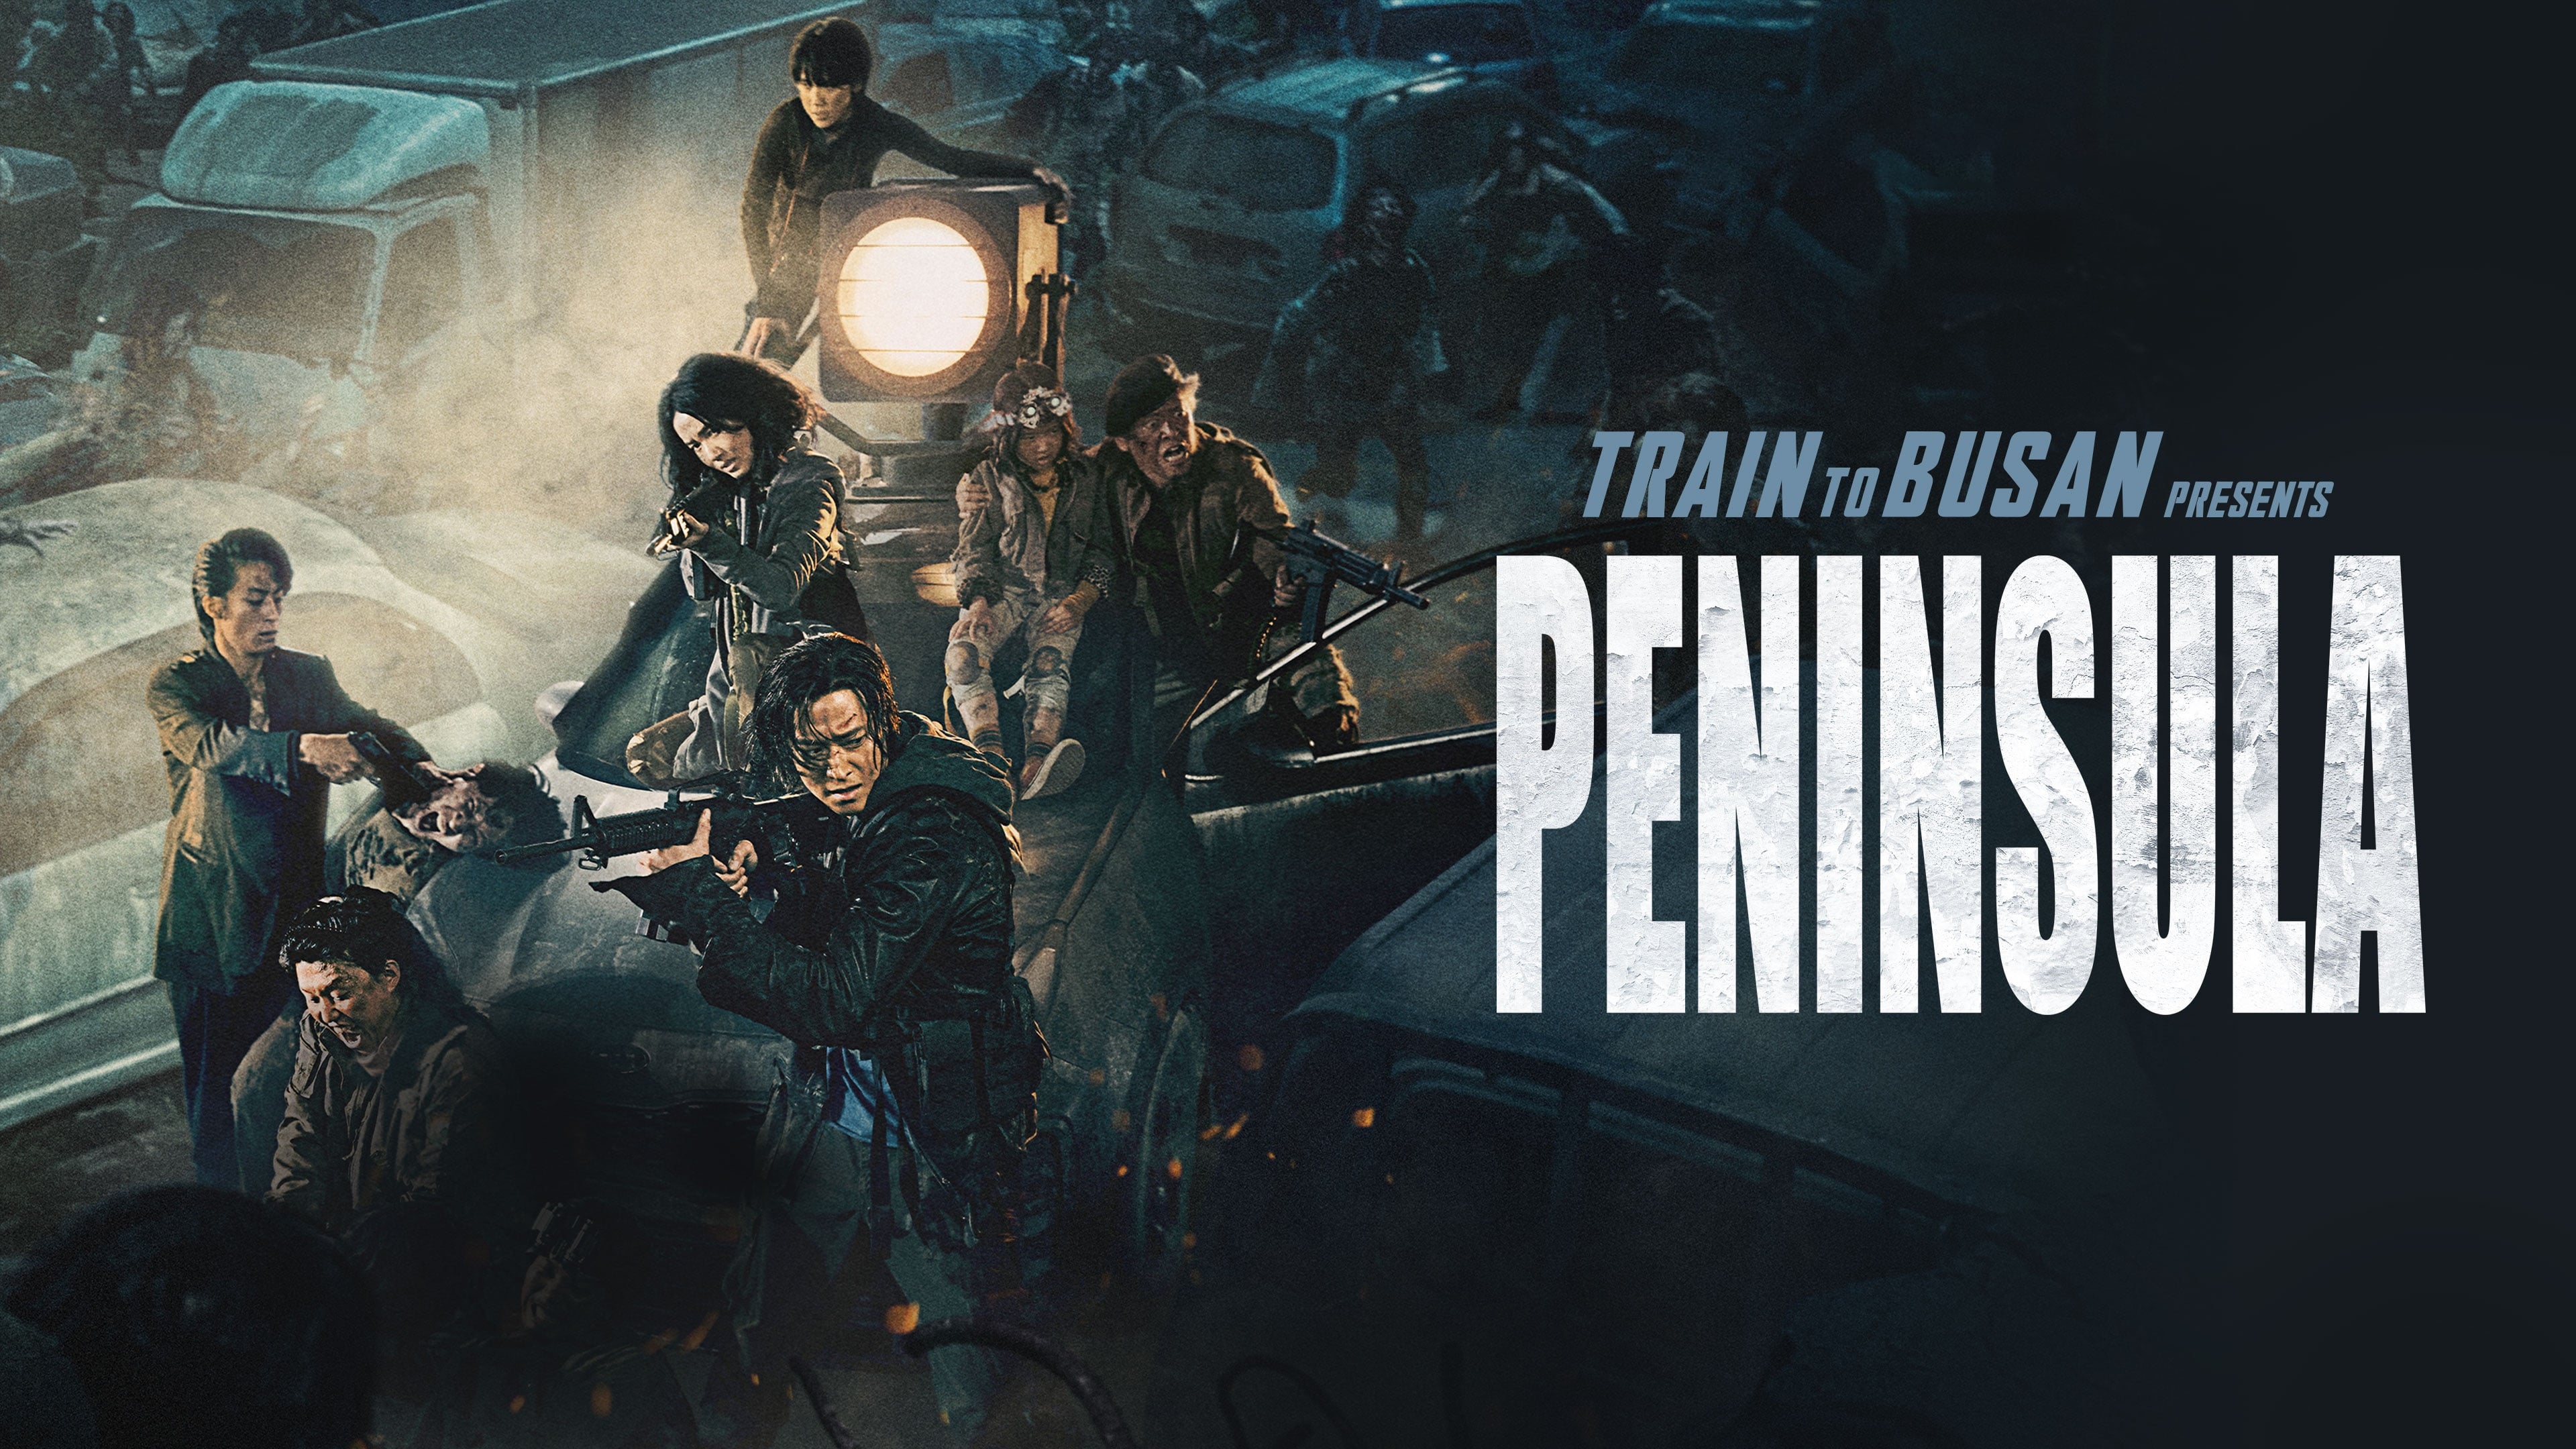 Train To Busan 2 Peninsula Full Movie Watch Online